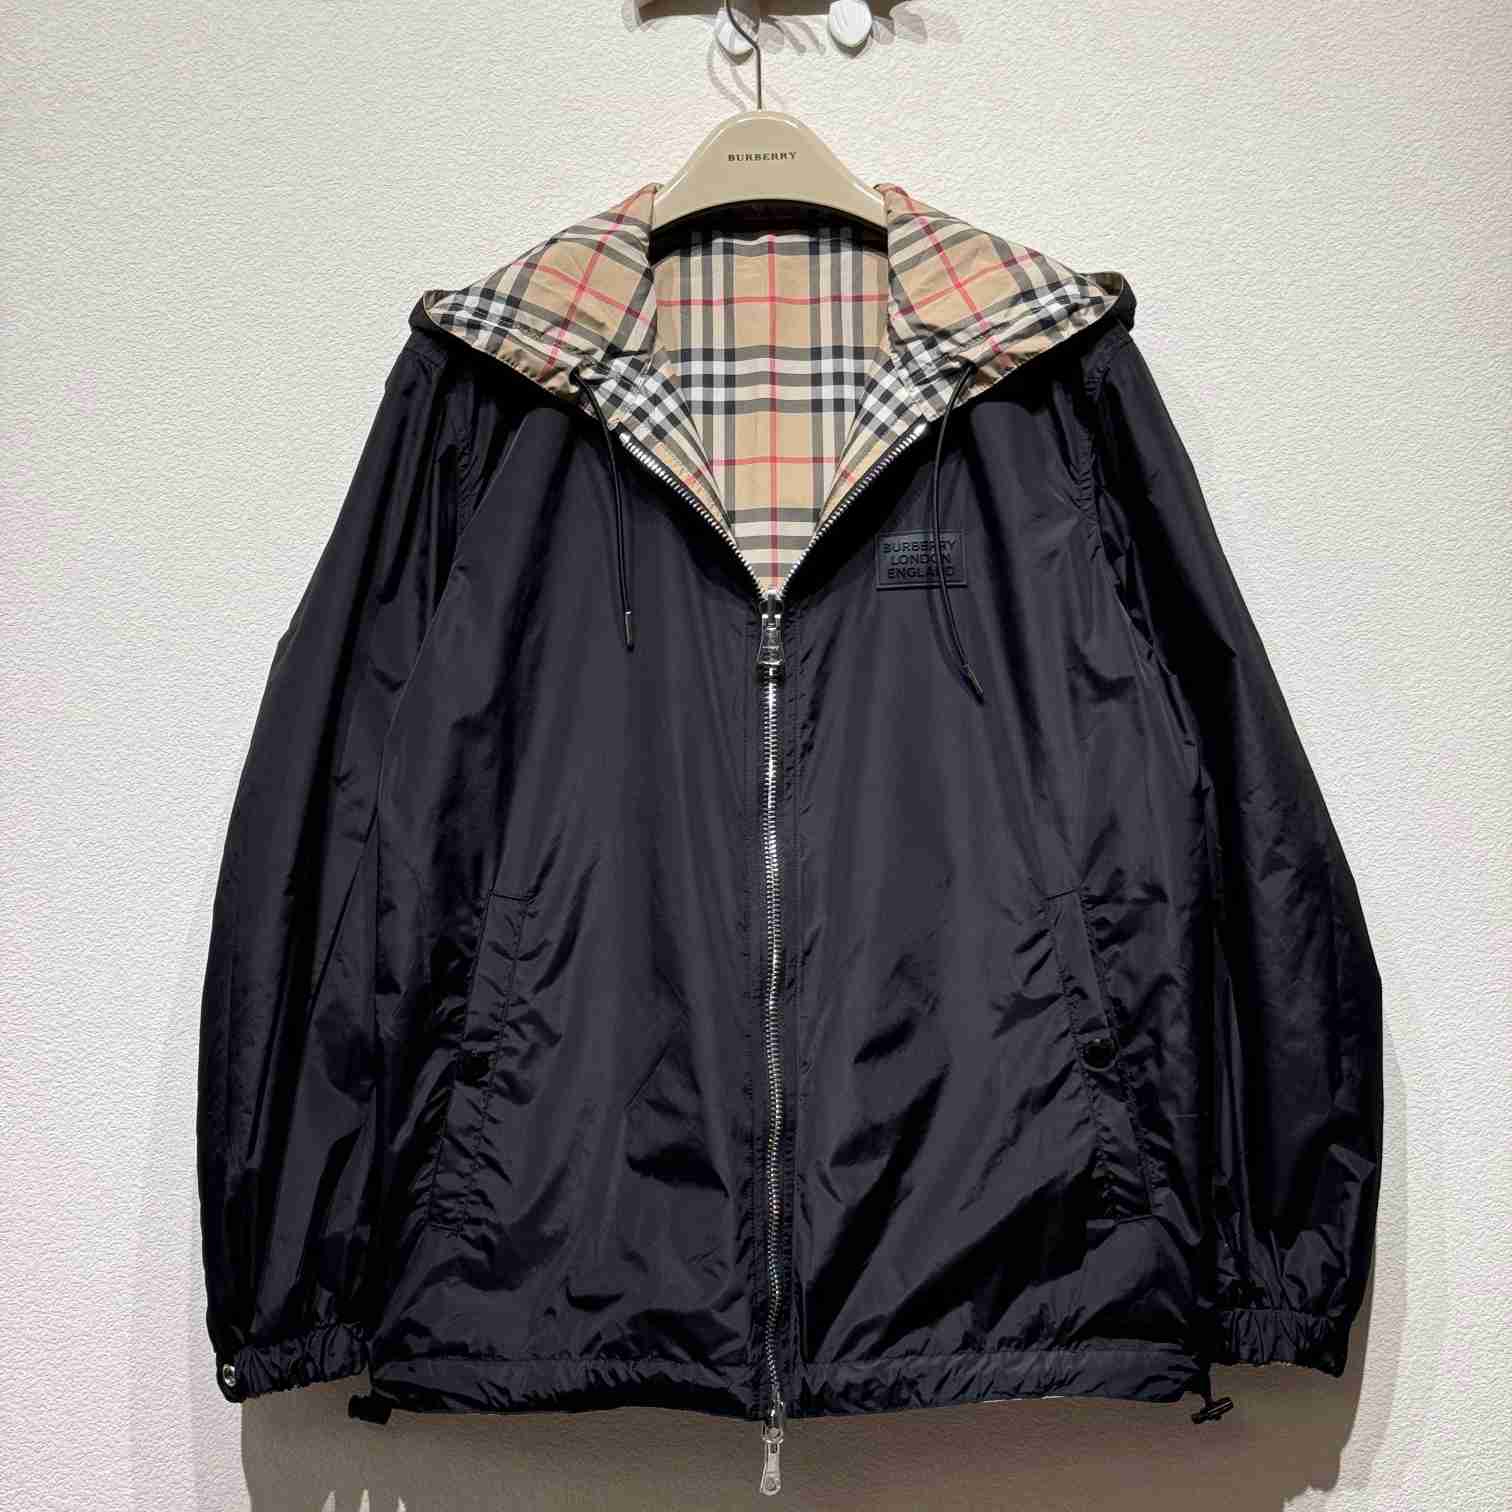 Burberry Reversible Check Jacket - everydesigner